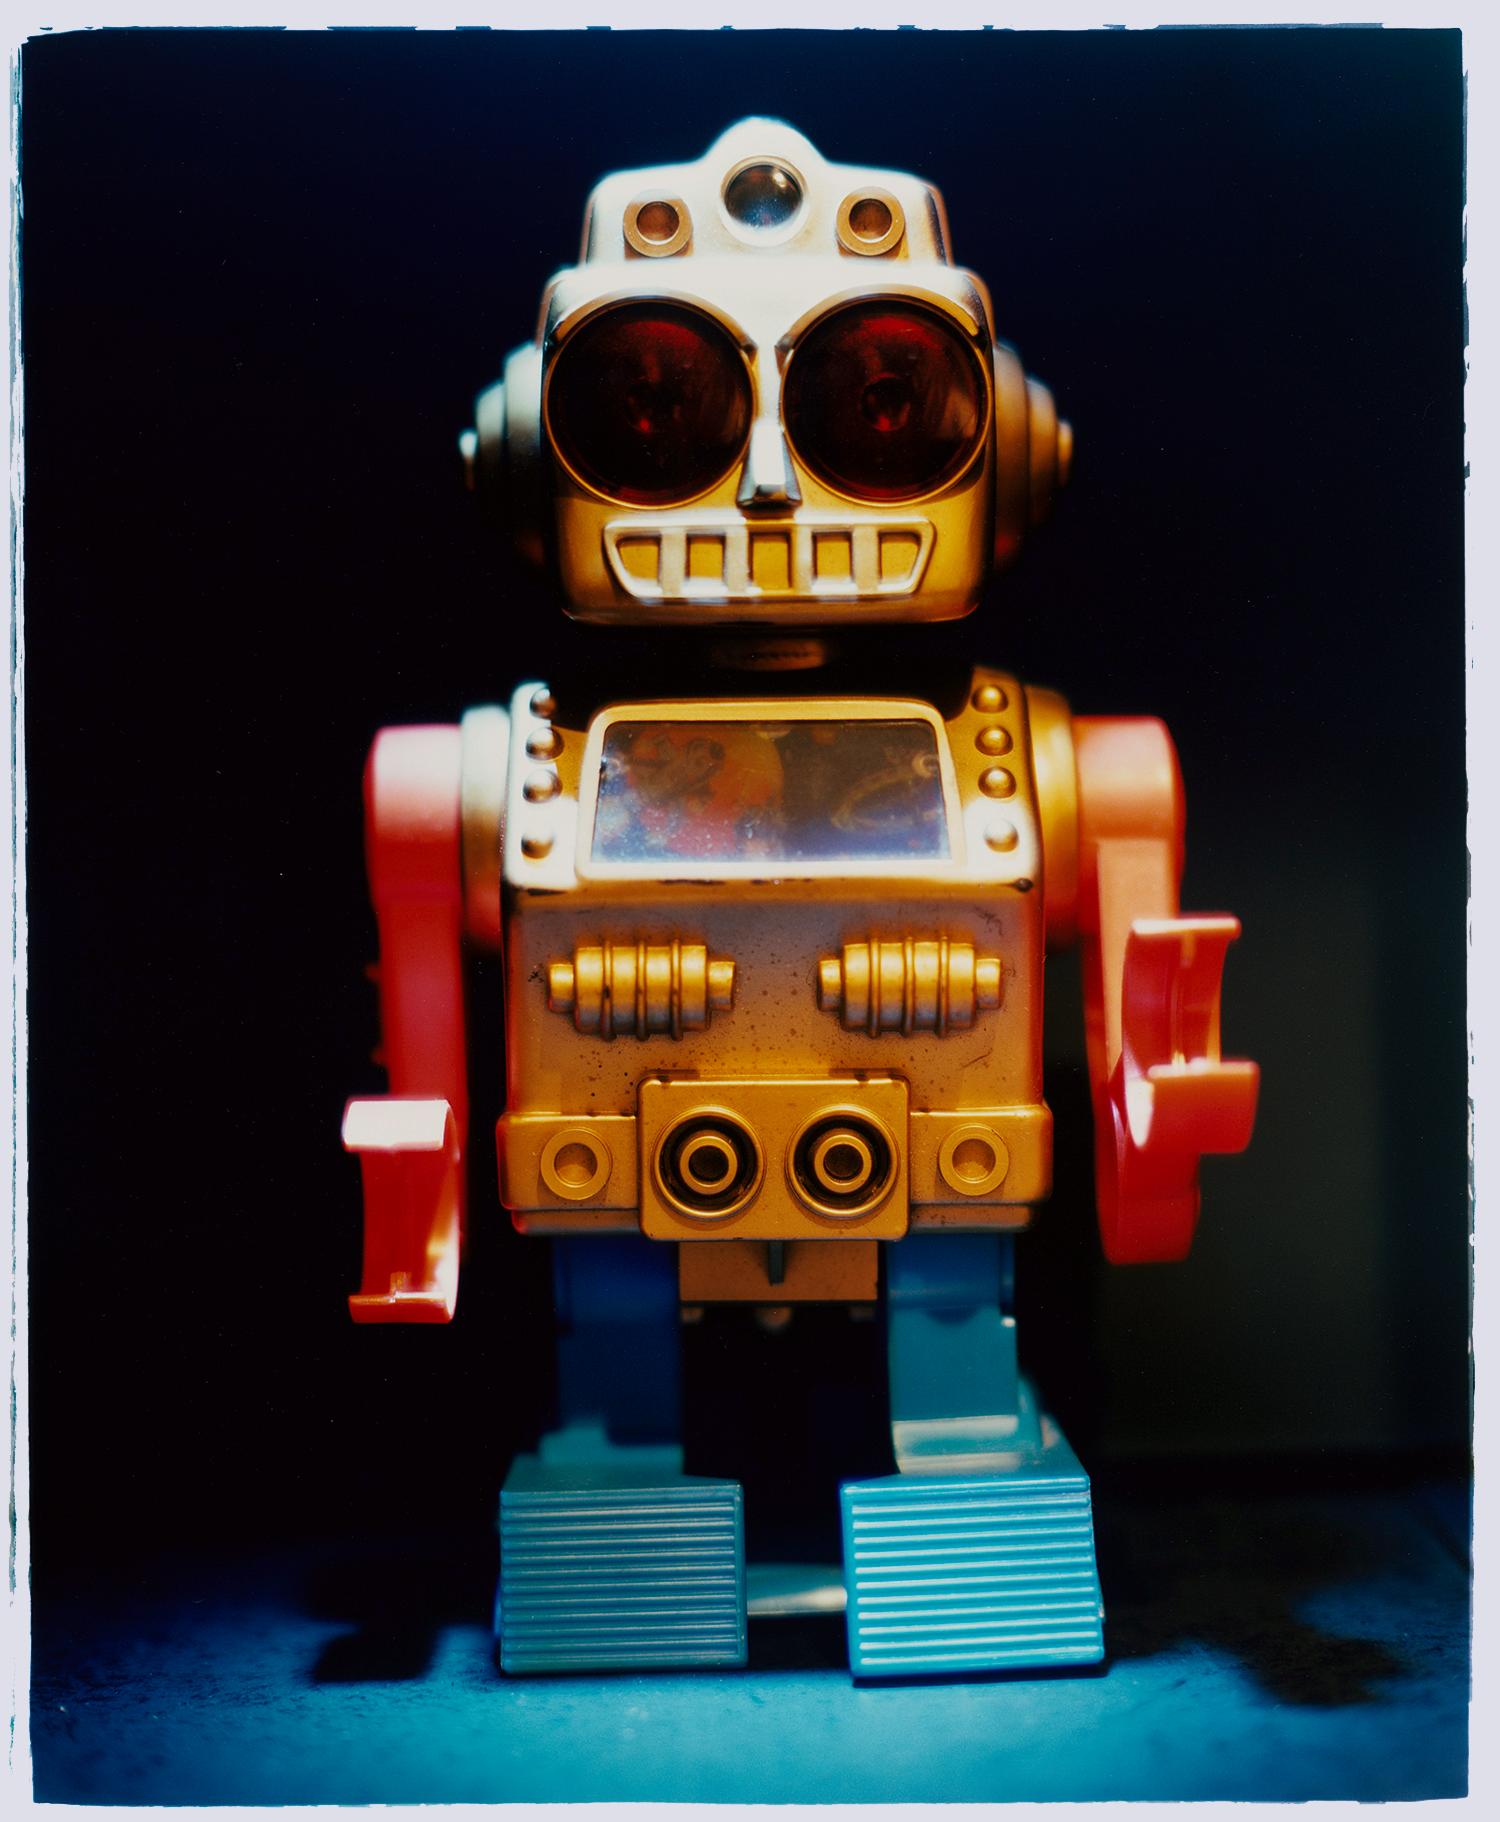 Pair of Robots - Pop Art Color Photography 5